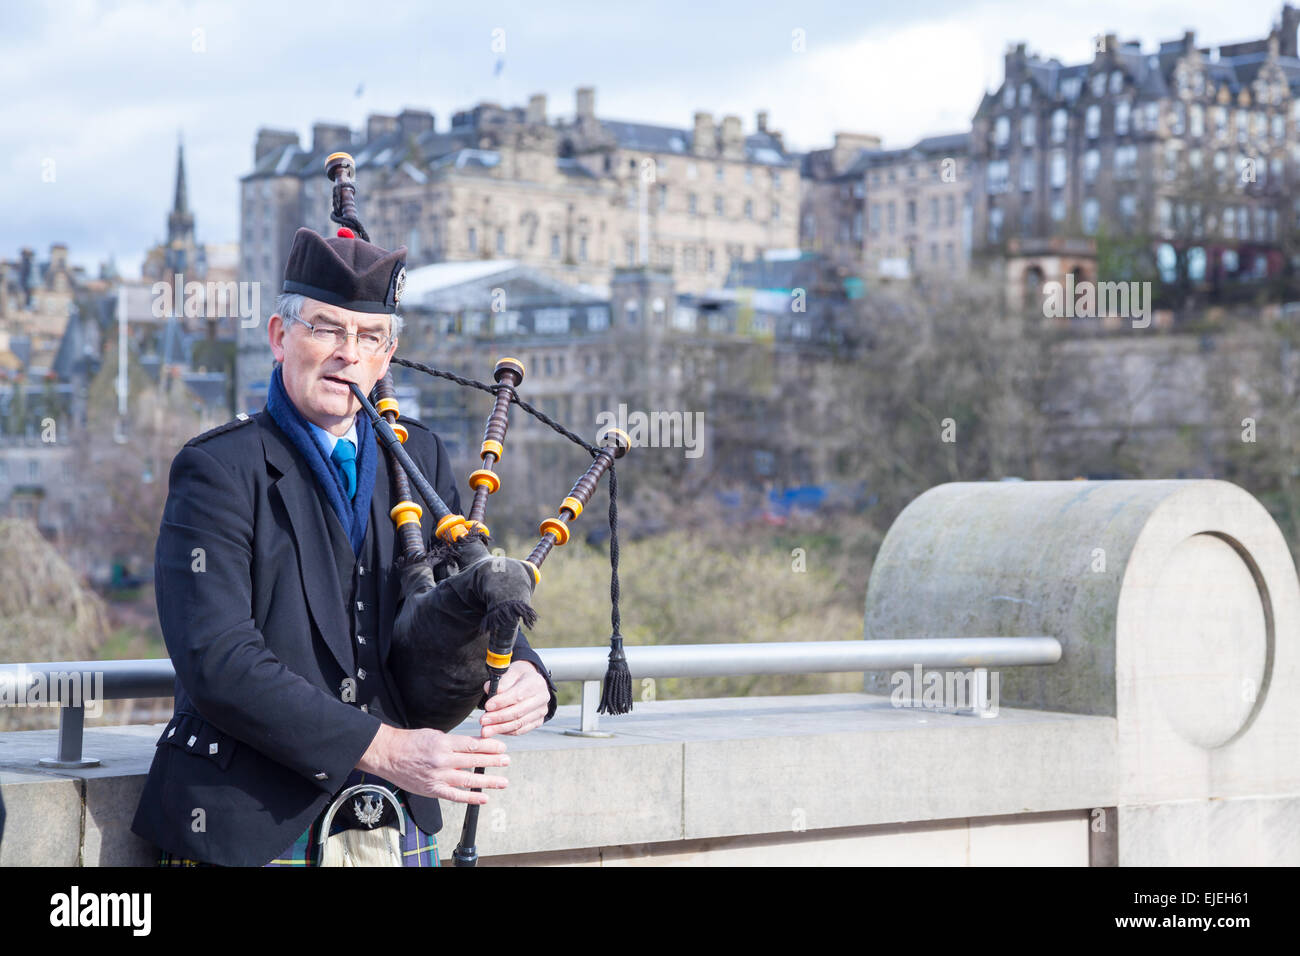 EDINBURGH, SCOTLAND, UNITED KIINGDOM - APRIL 10 : Unidentified Scottish Bagpiper playing music with bagpipe at Edinburgh on Apri Stock Photo